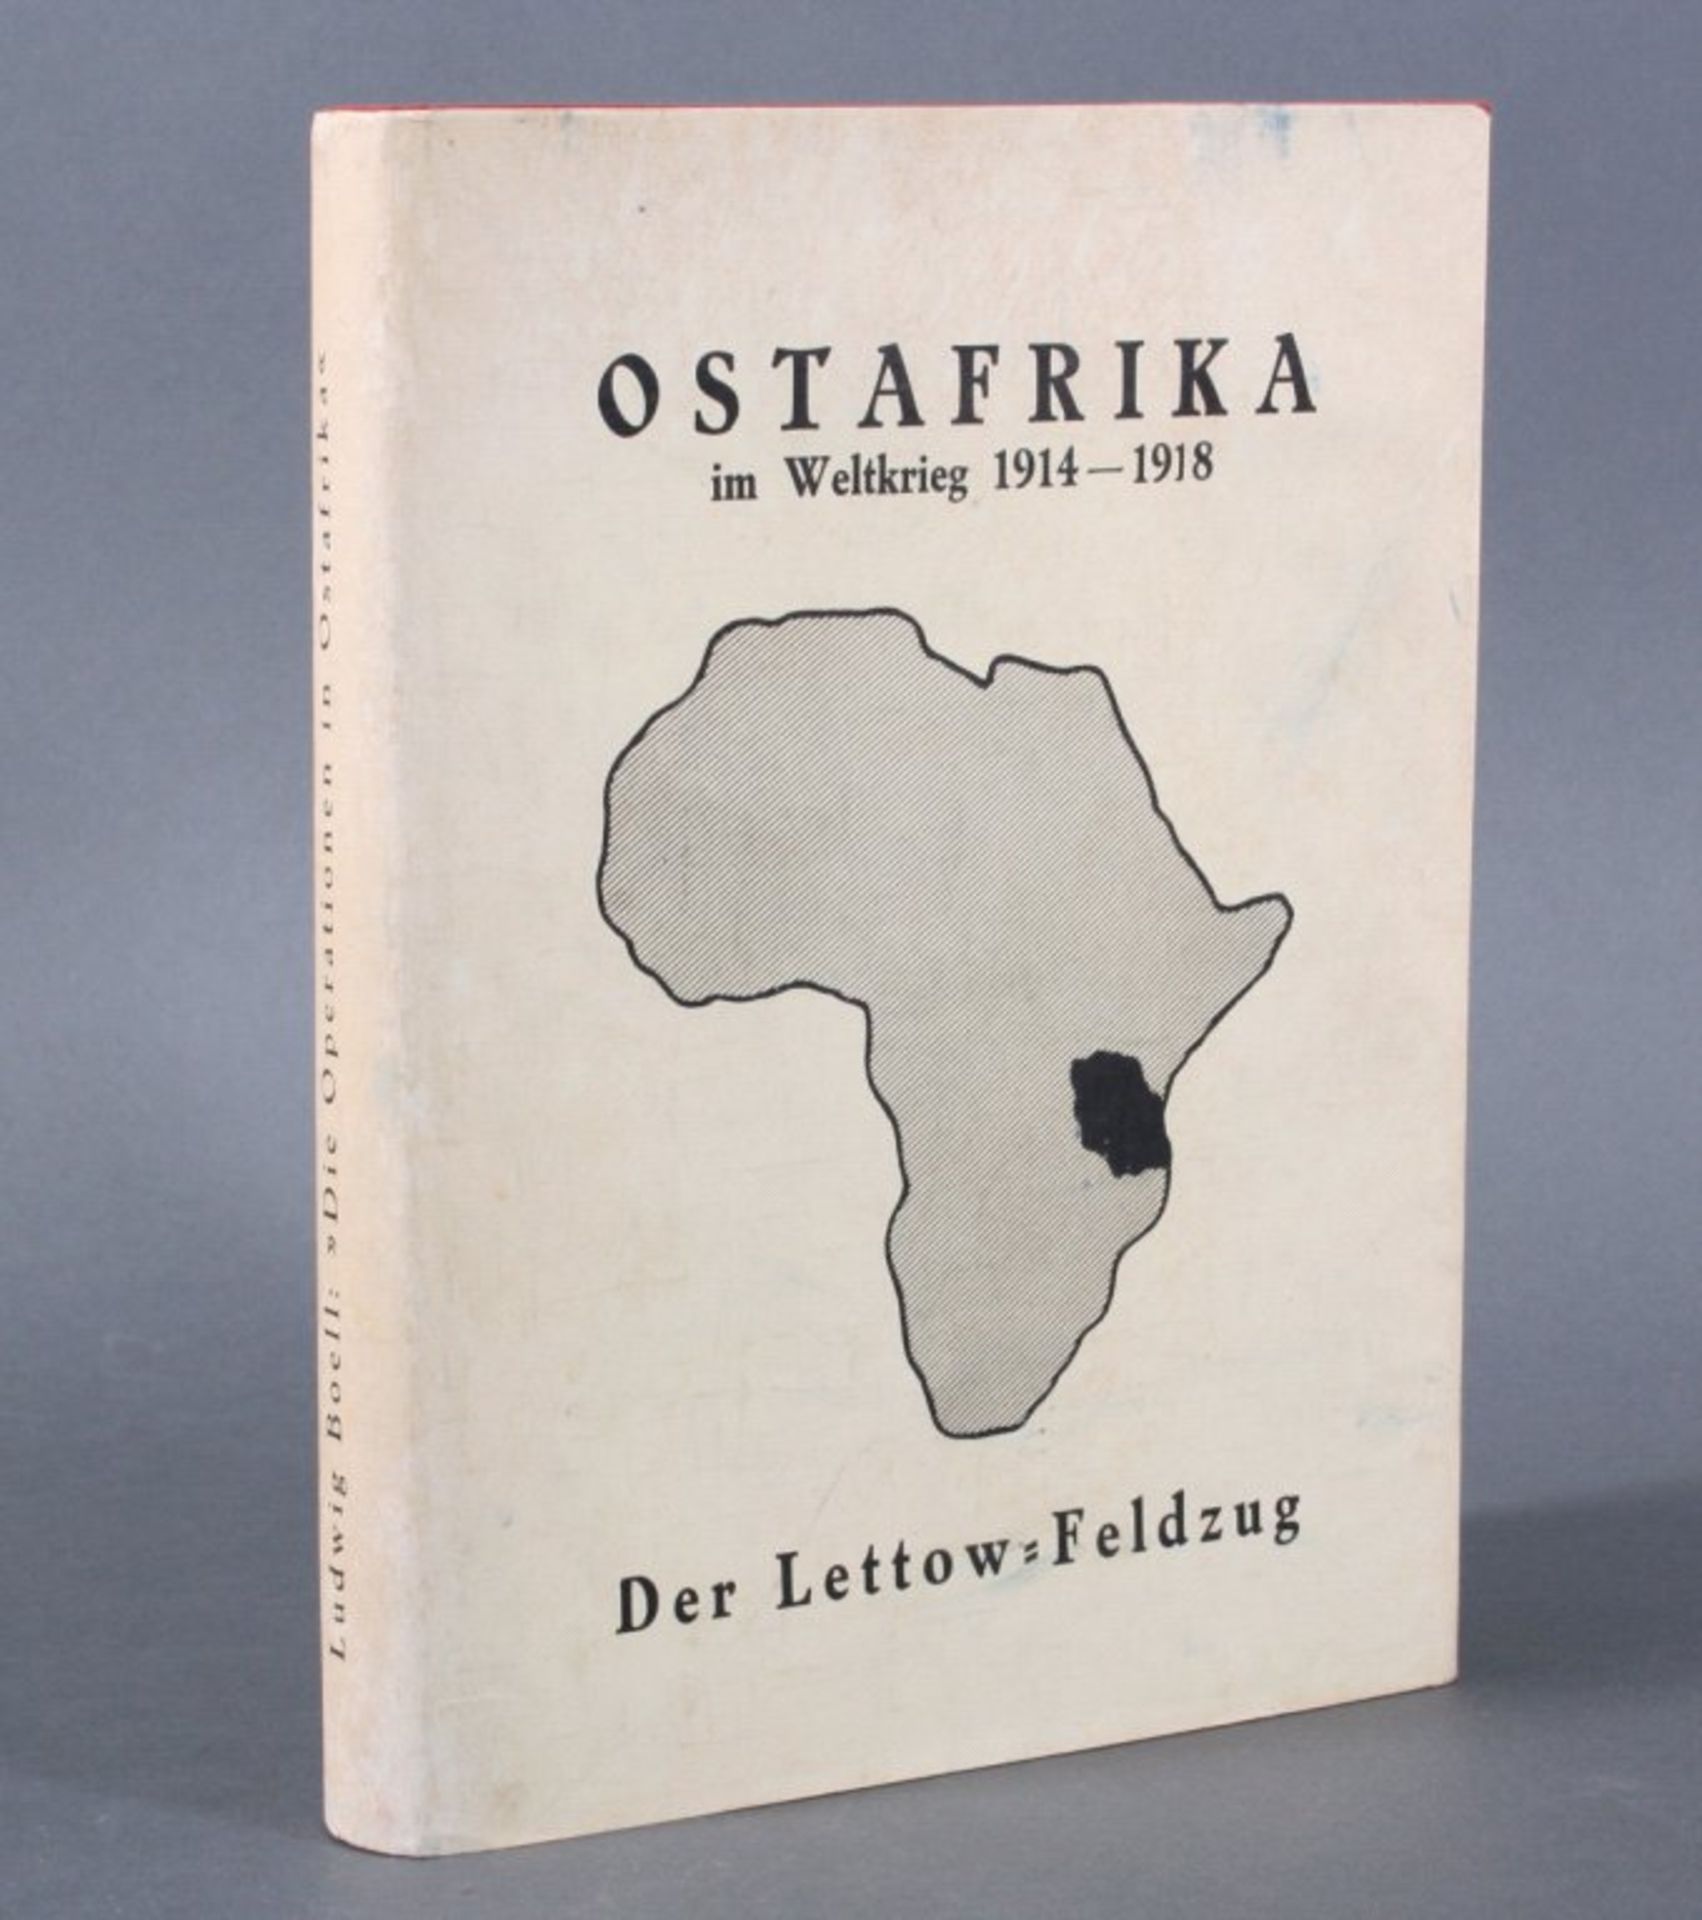 Die Operationen in Ostafrika Weltkrieg 1914-1918Ludwig Boell (Umschlagtitel: Ostafrika im